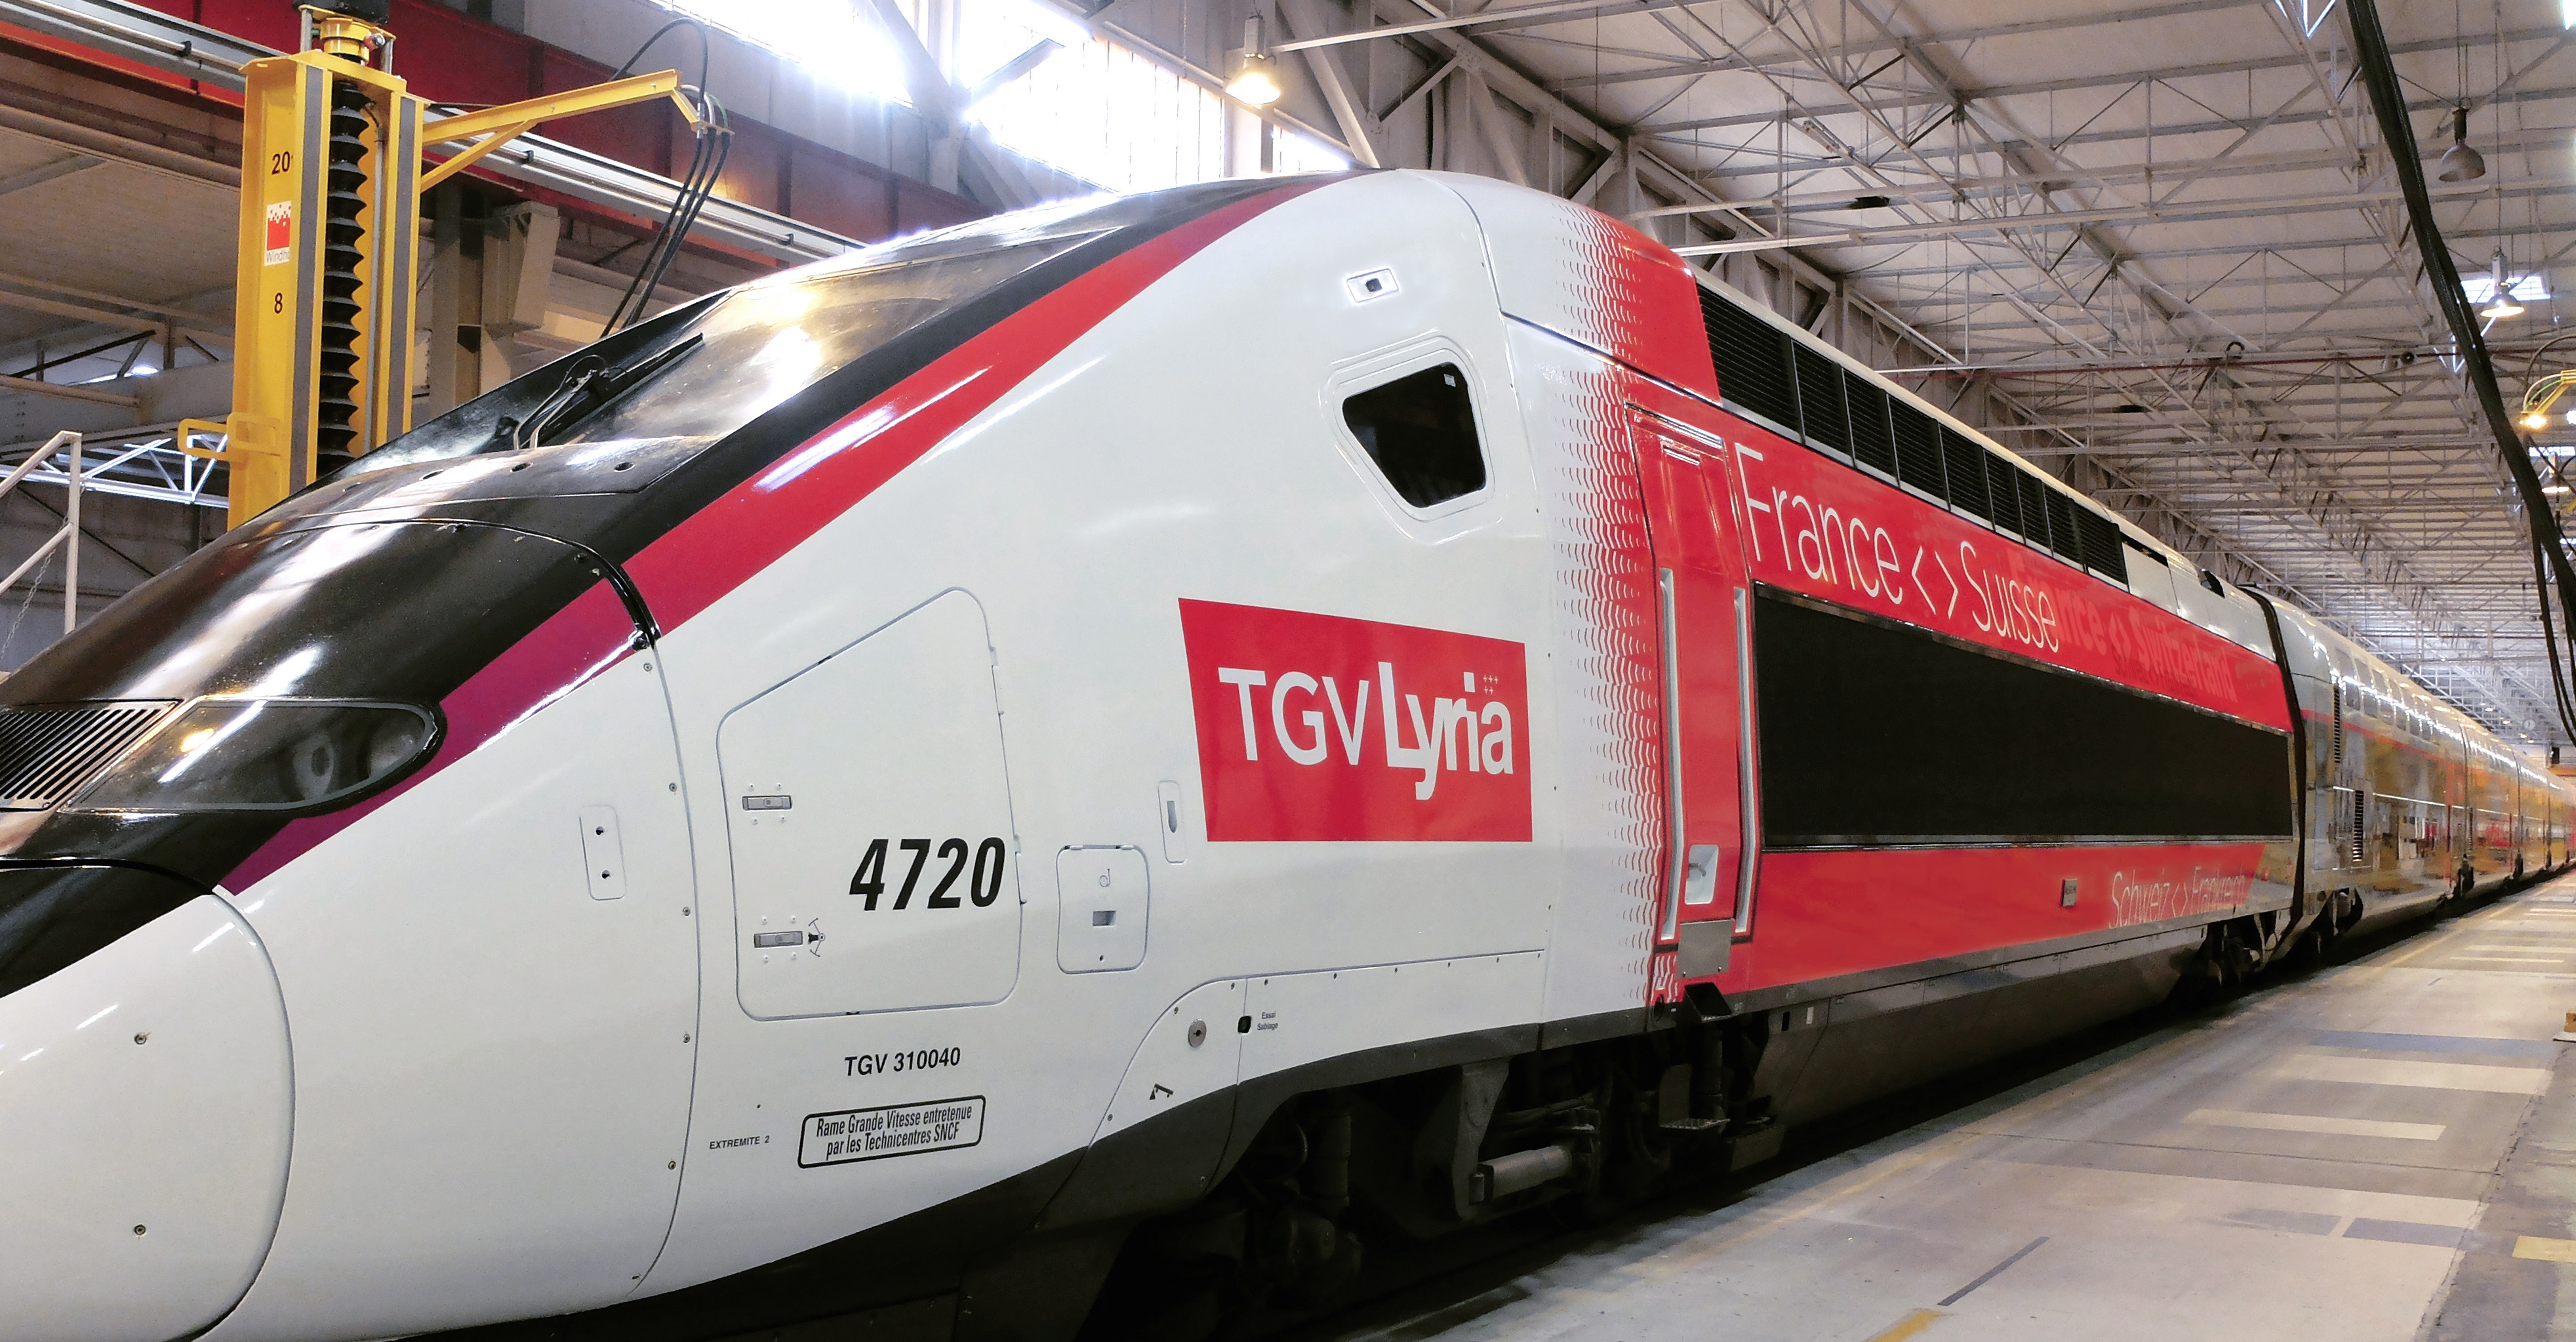 TGV Lyria 2020 nach Paris stark nachgefragt - TRAVEL INSIDE